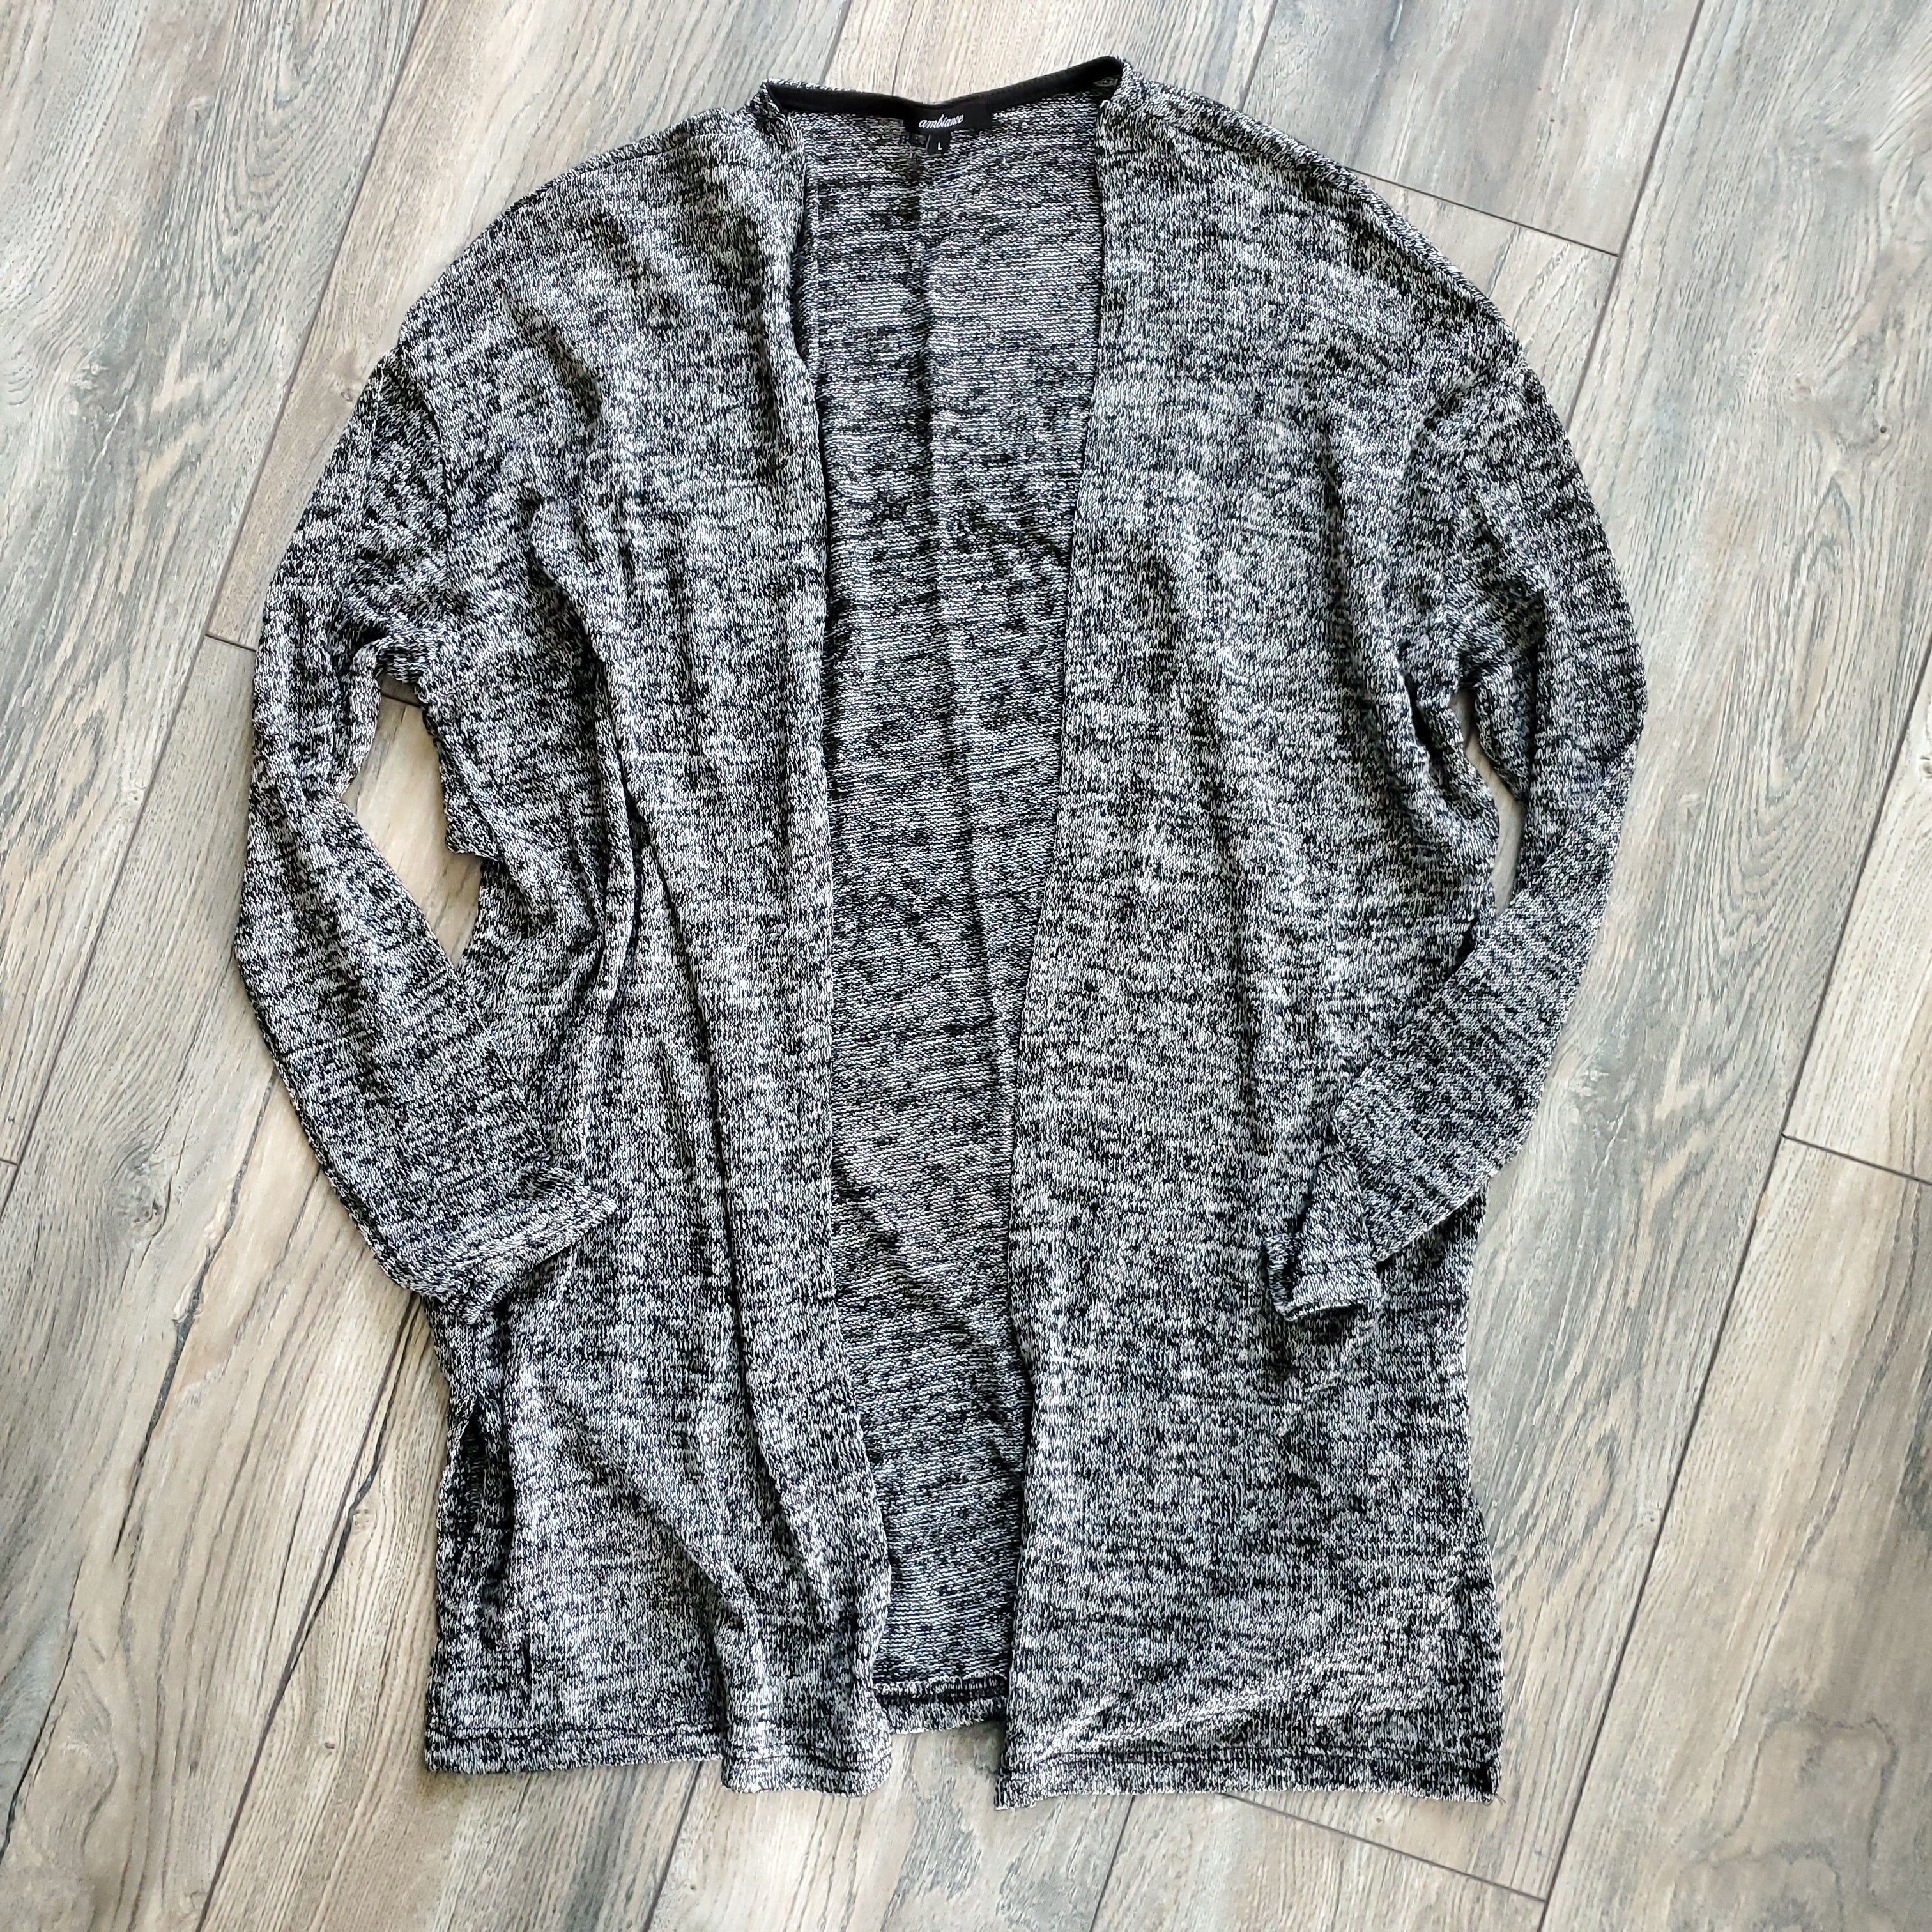 Charcoal Knit Cardigan